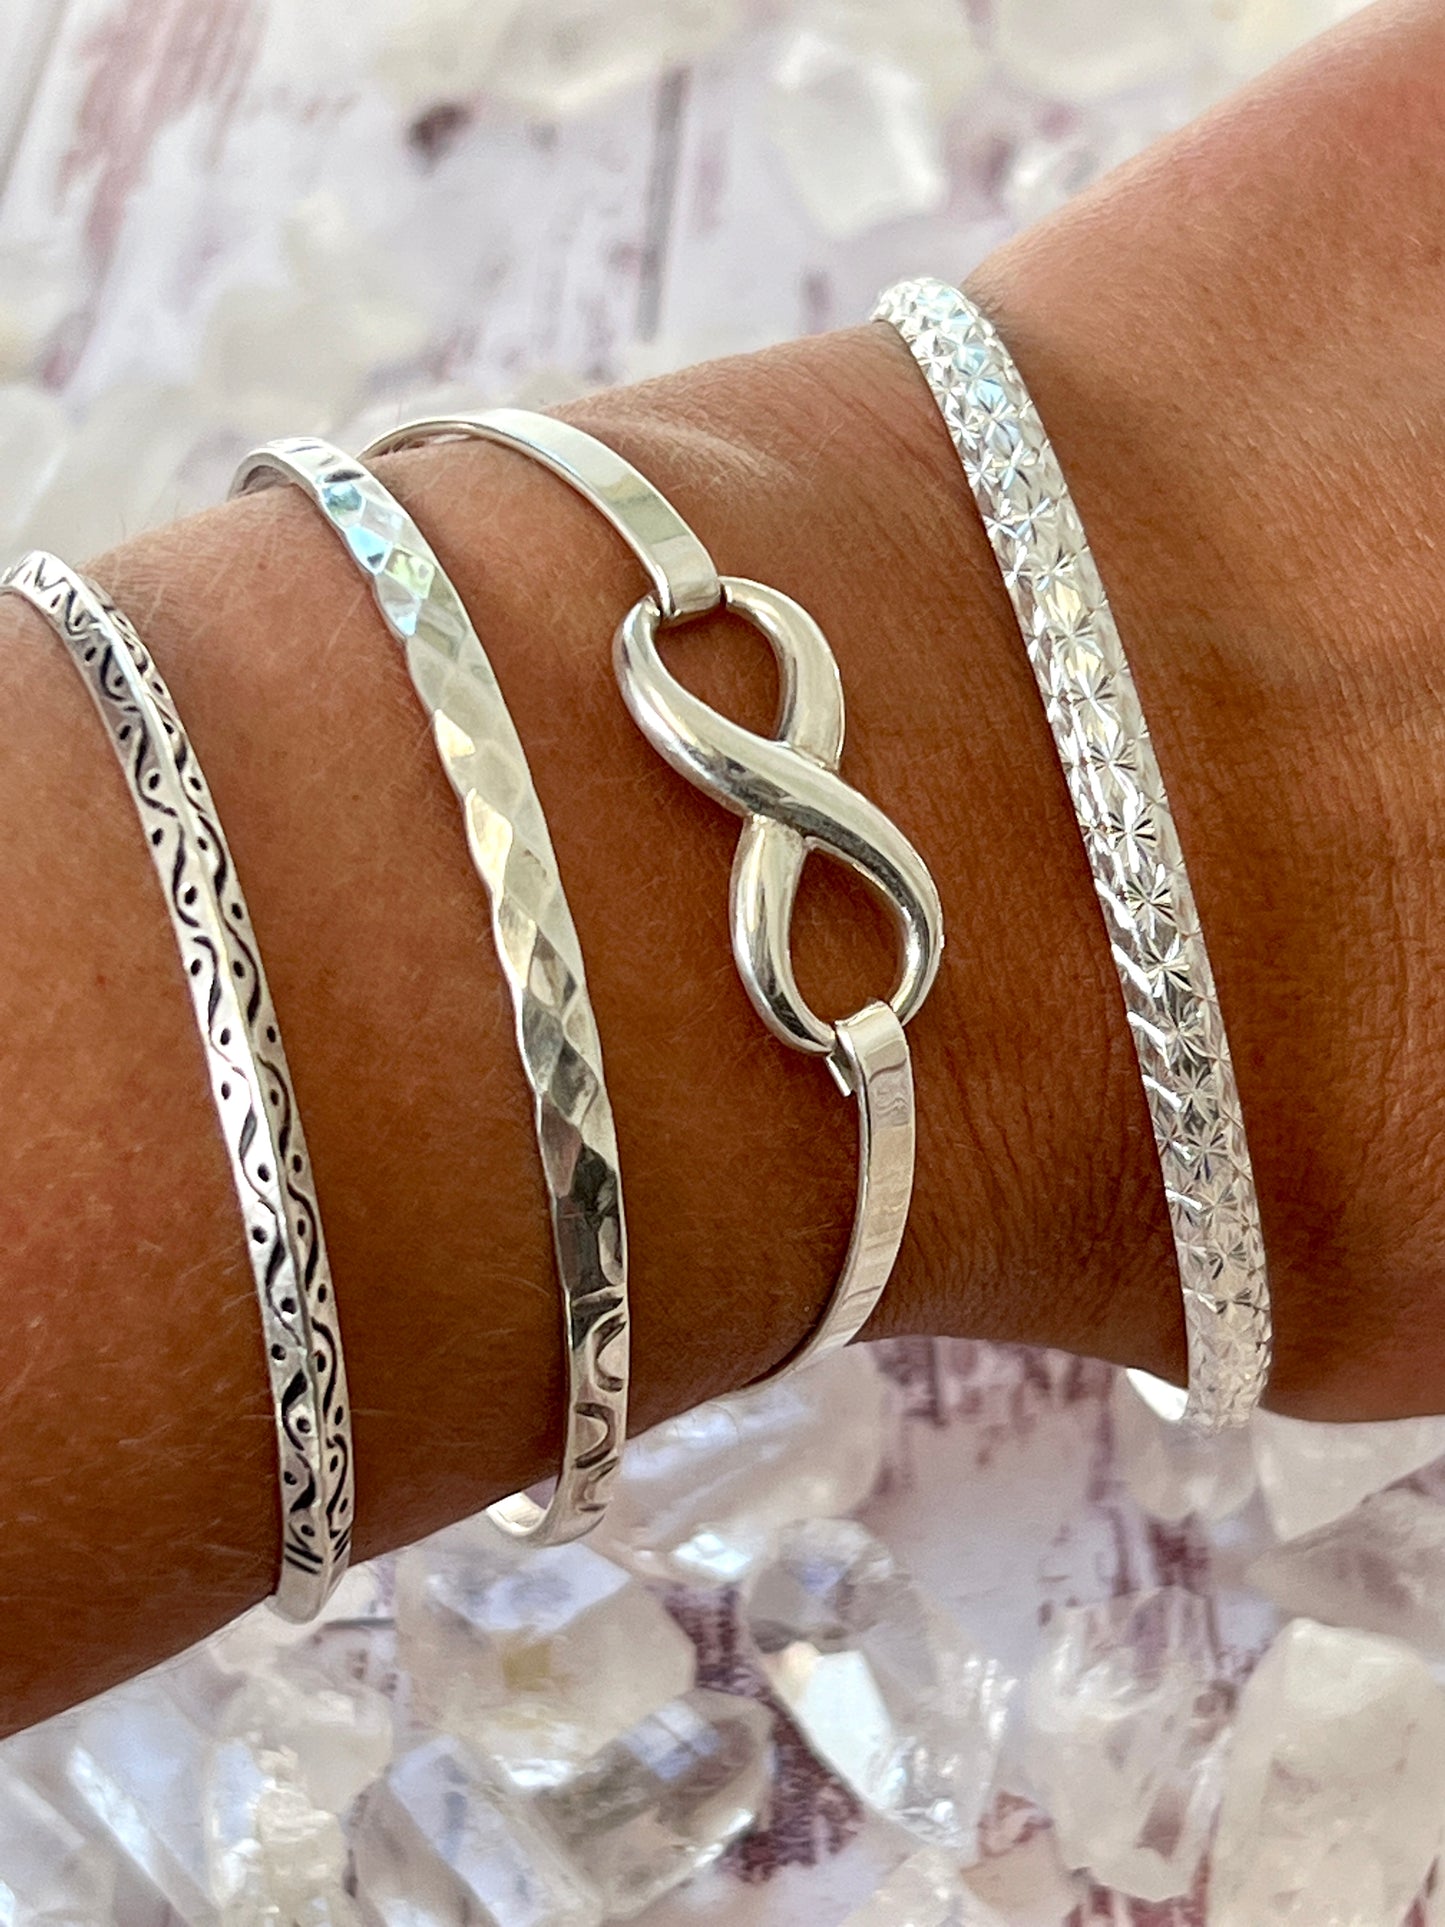 
                  
                    Three stunning Super Silver Elegant Etched Bangle Bracelets on a woman's wrist.
                  
                